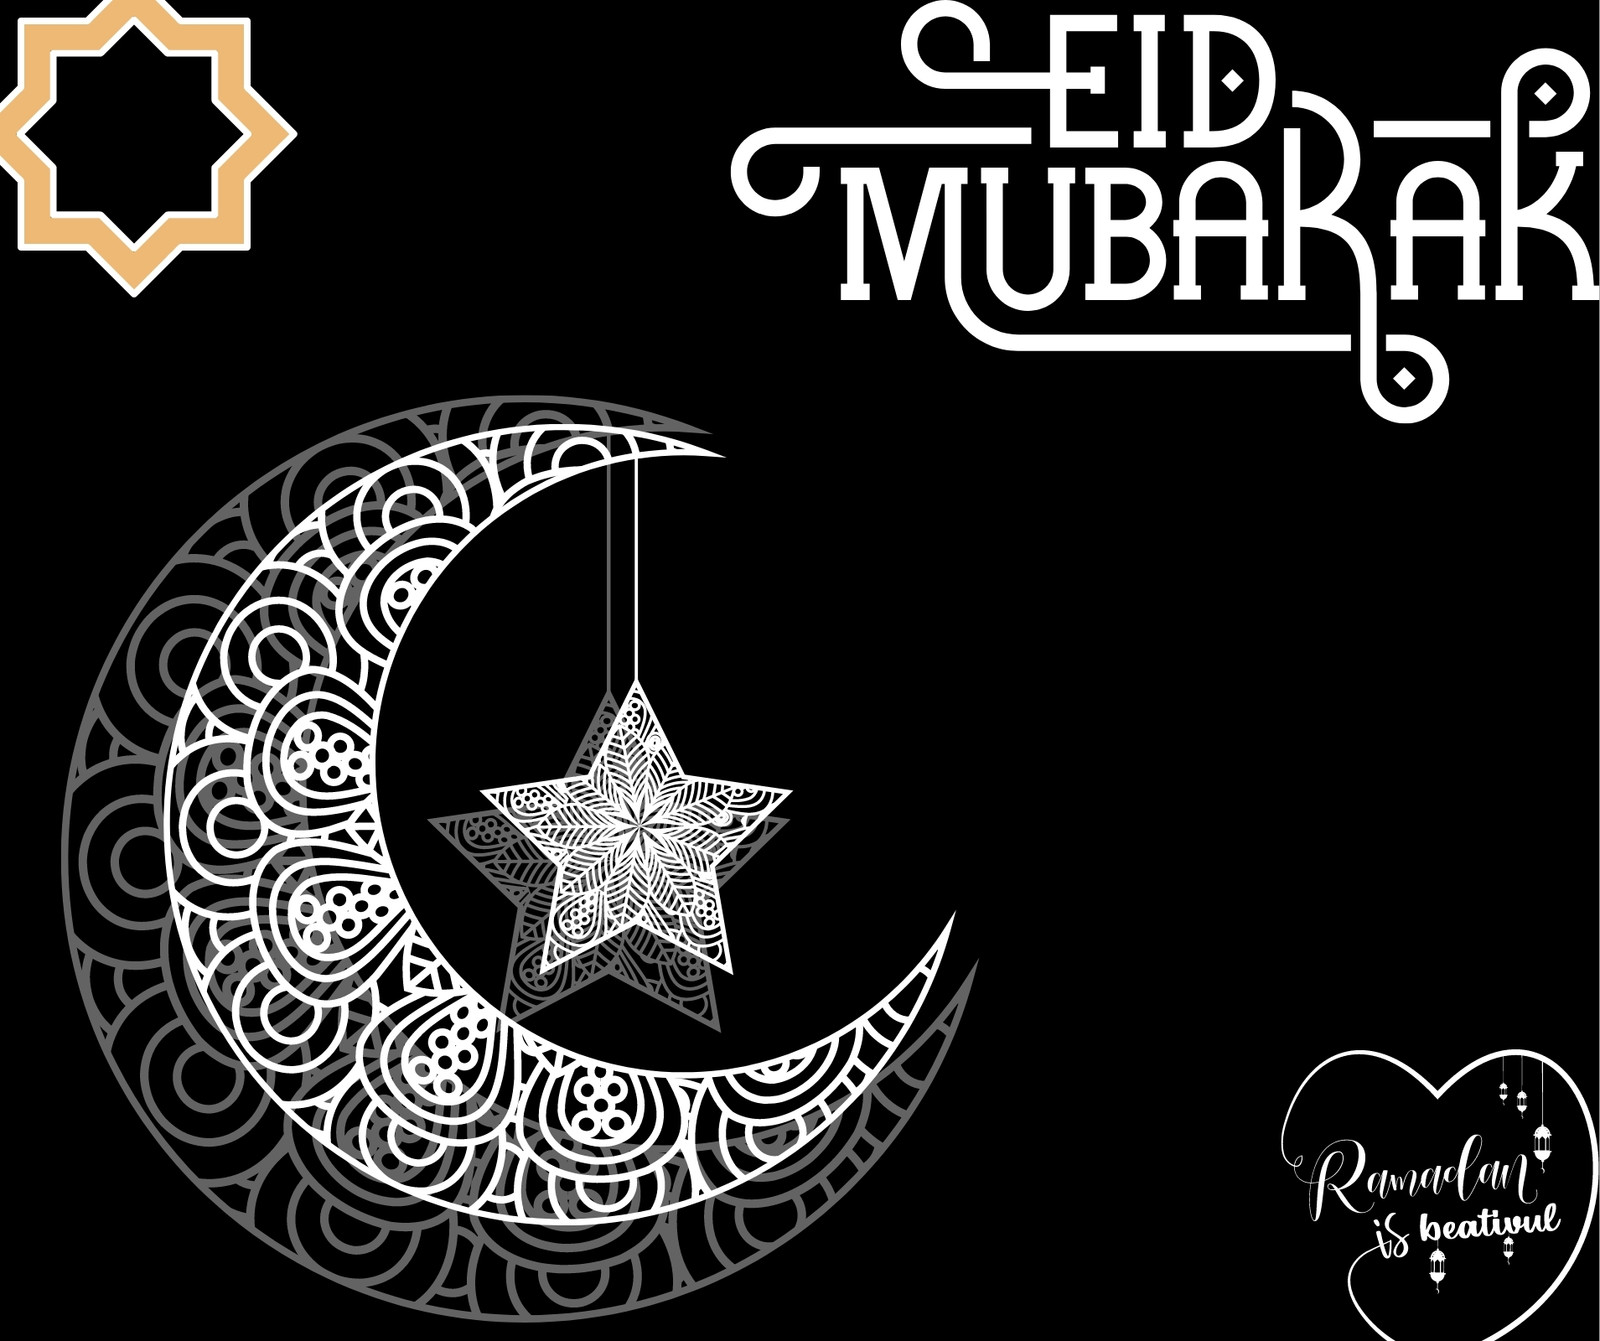 eid mubarak (Facebook Post)